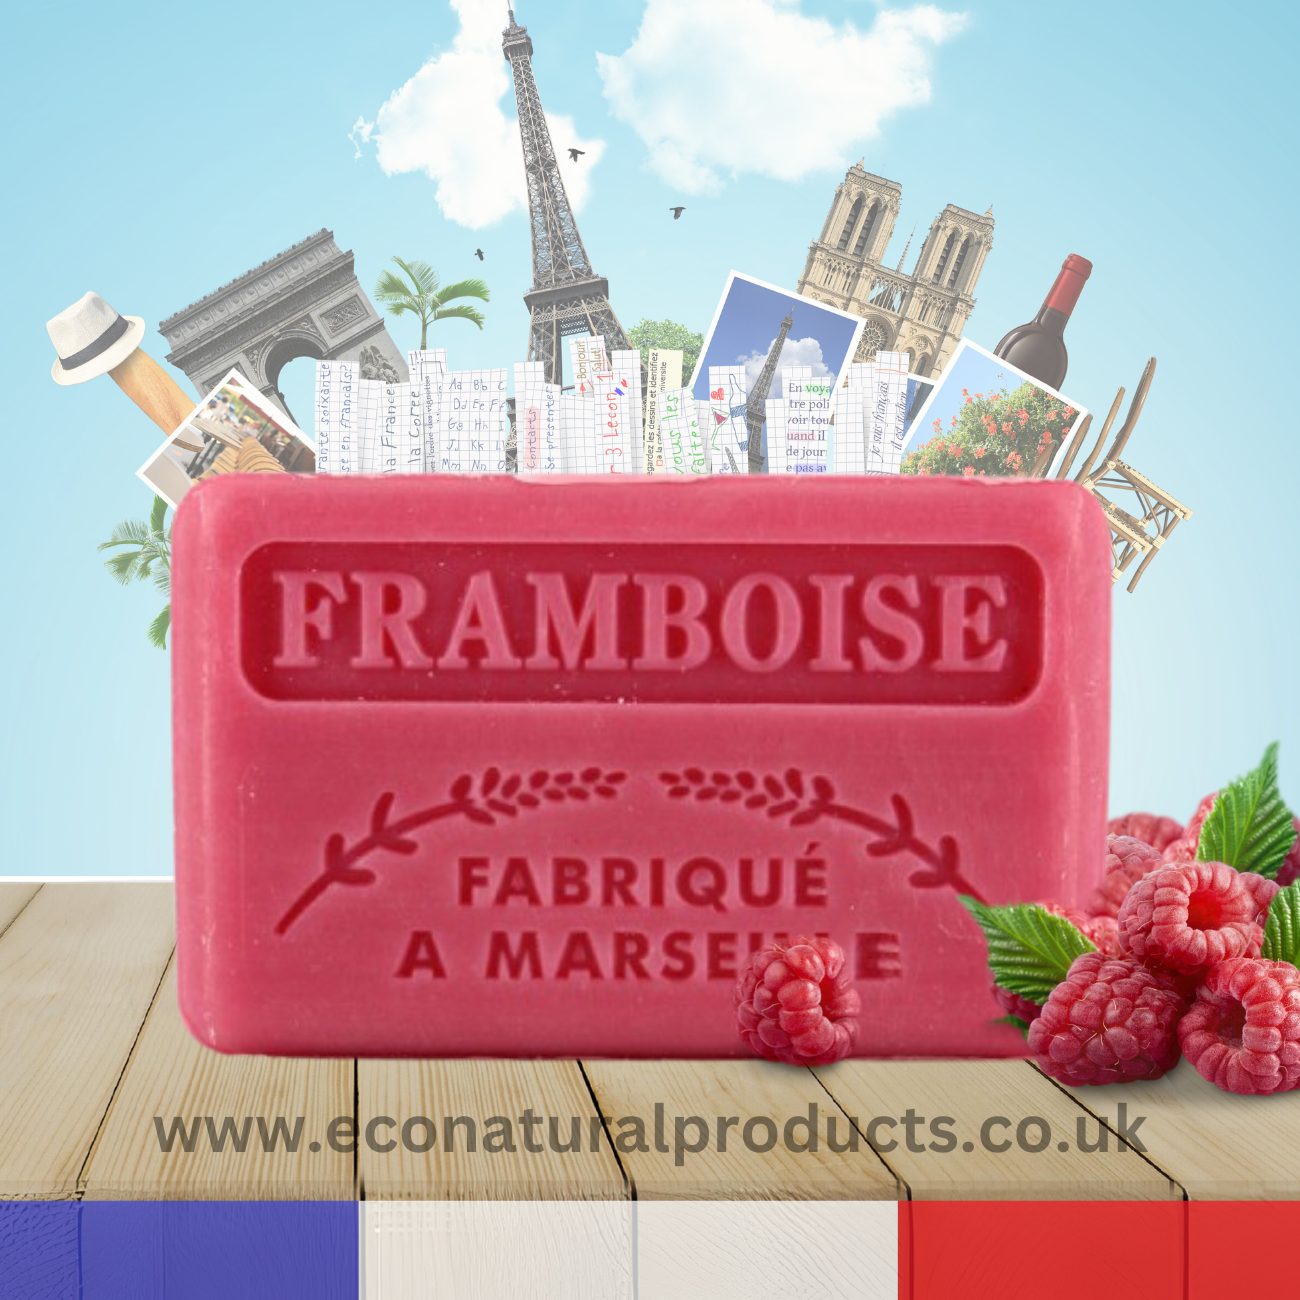 French Marseille Soap Framboise (Raspberry) 125g